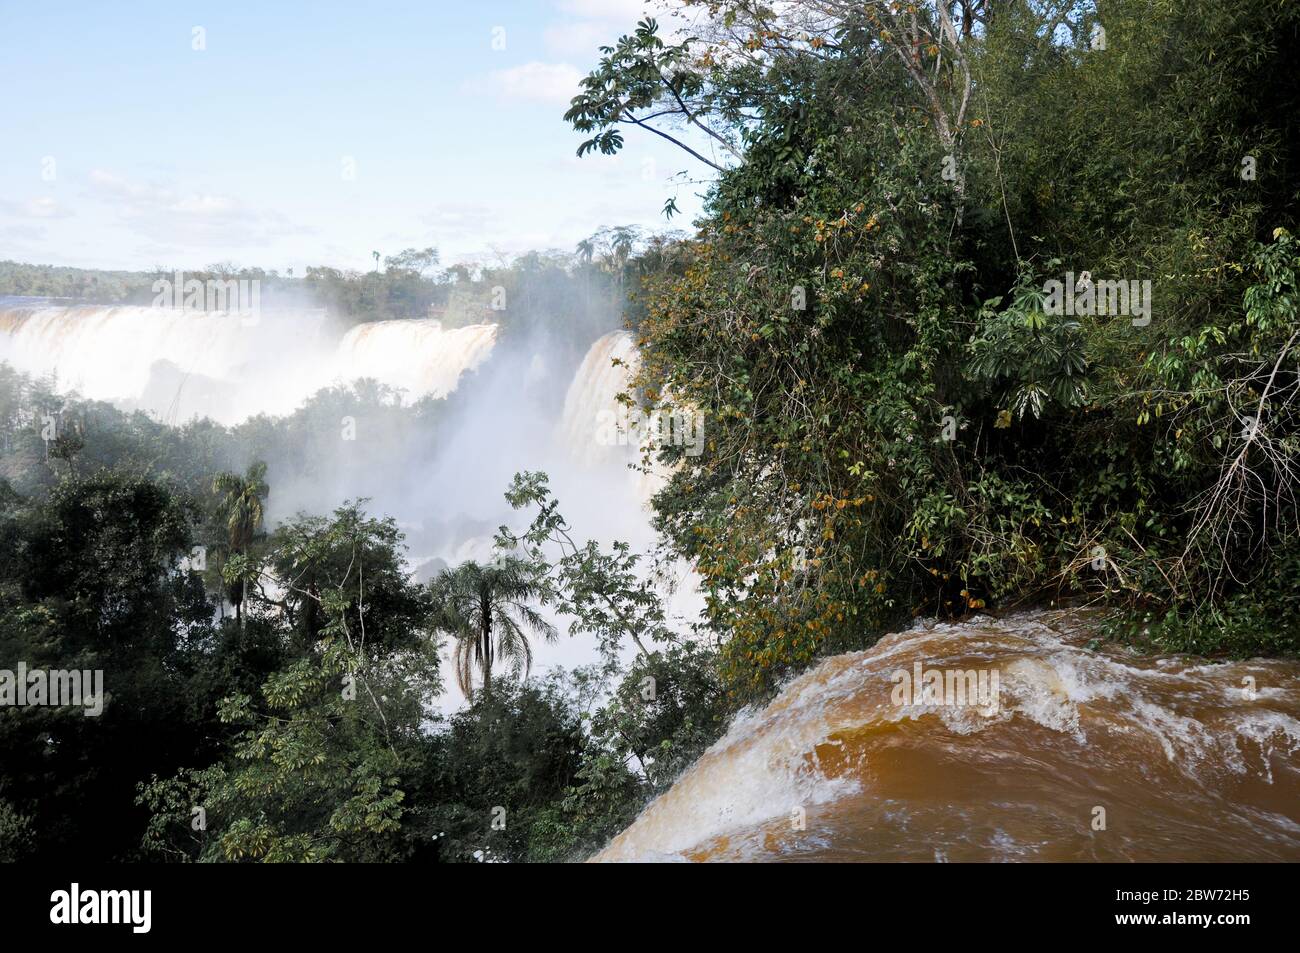 Paesaggio di grandi e belle cascate, Cataratas do Iguacu (Cascate di Iguazu), Foz do Iguacu, situato in Argentina e Brasile (stagione delle alluvioni) Foto Stock